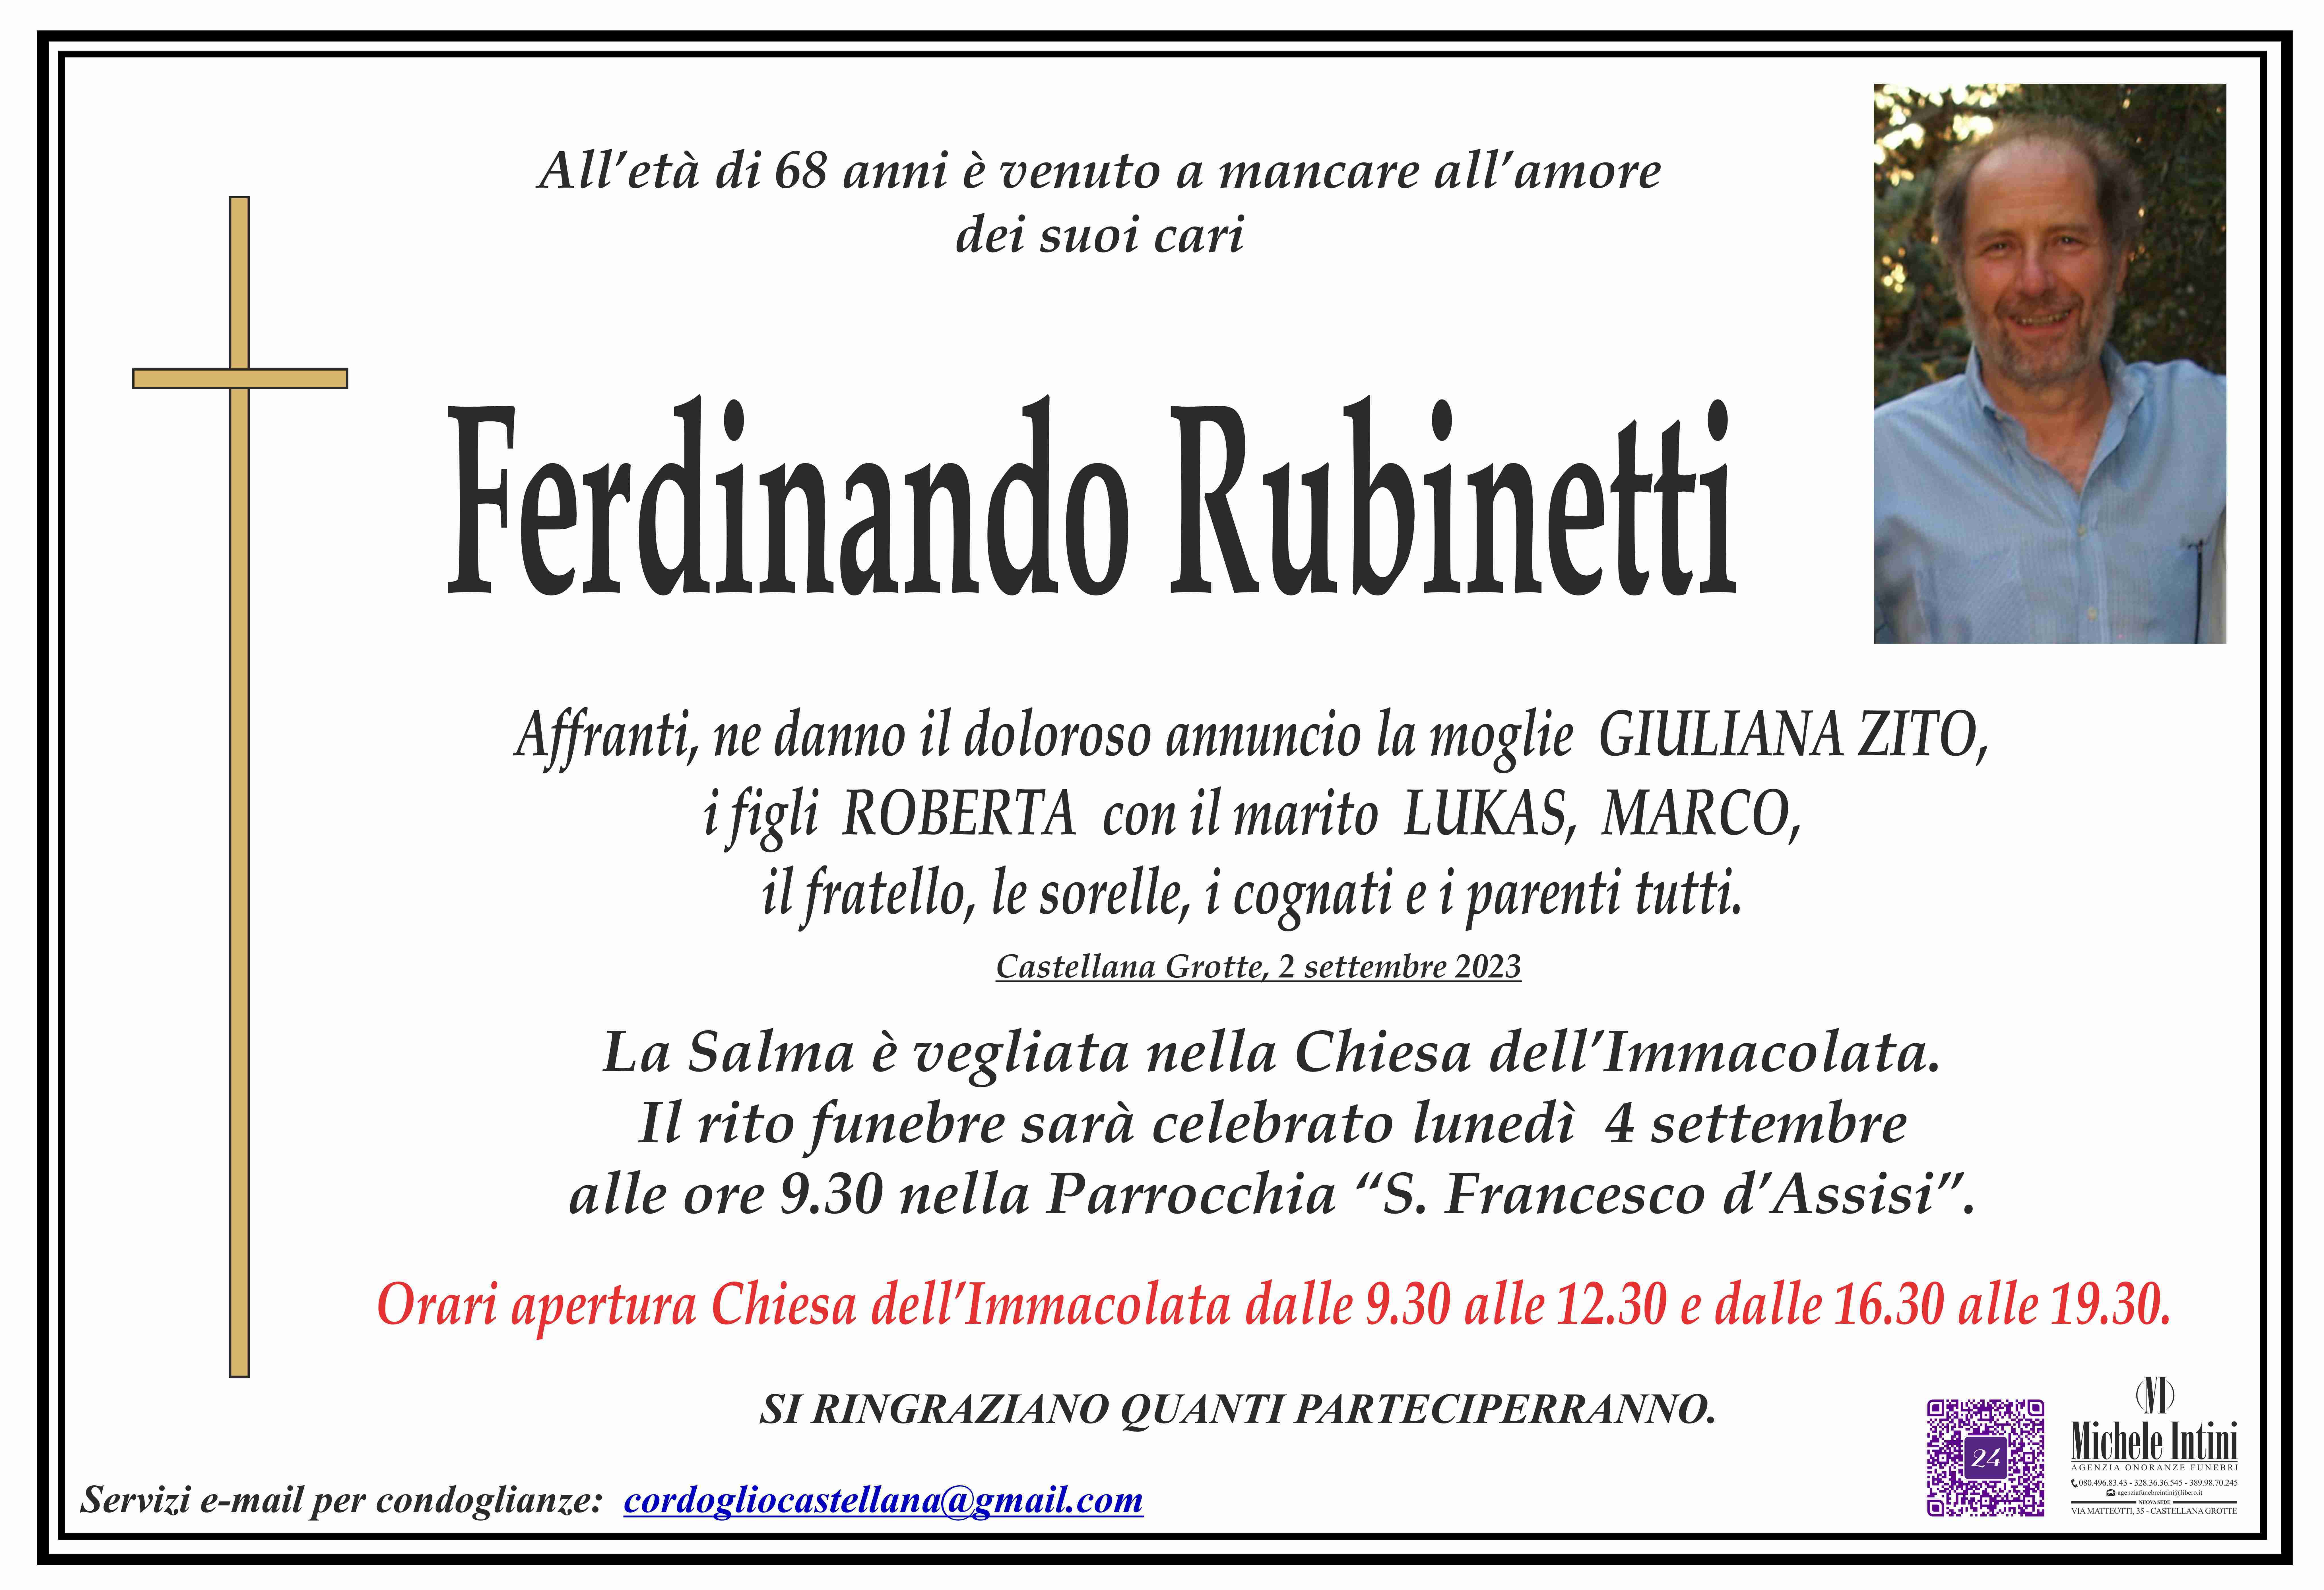 Ferdinando Rubinetti